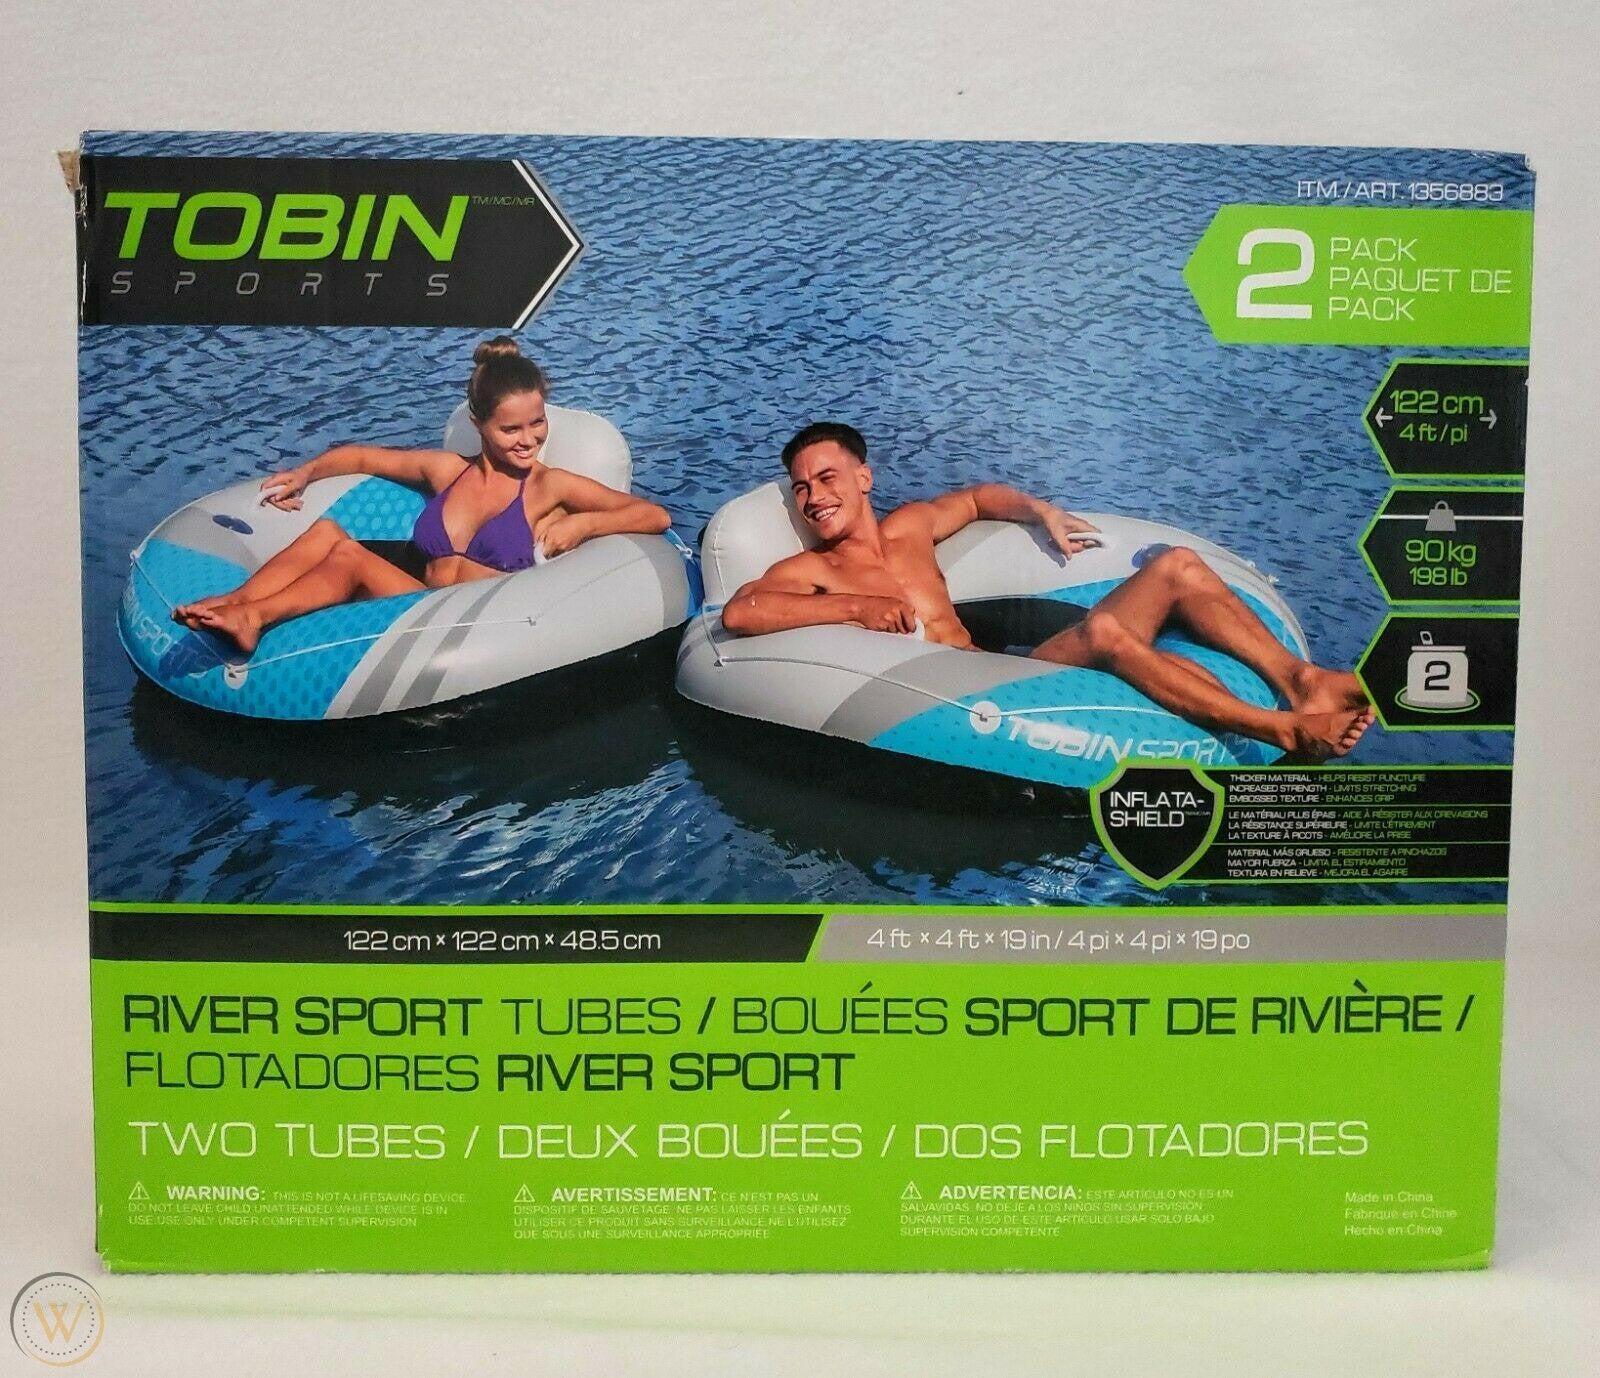 Tobin Sports River Sport Tubes